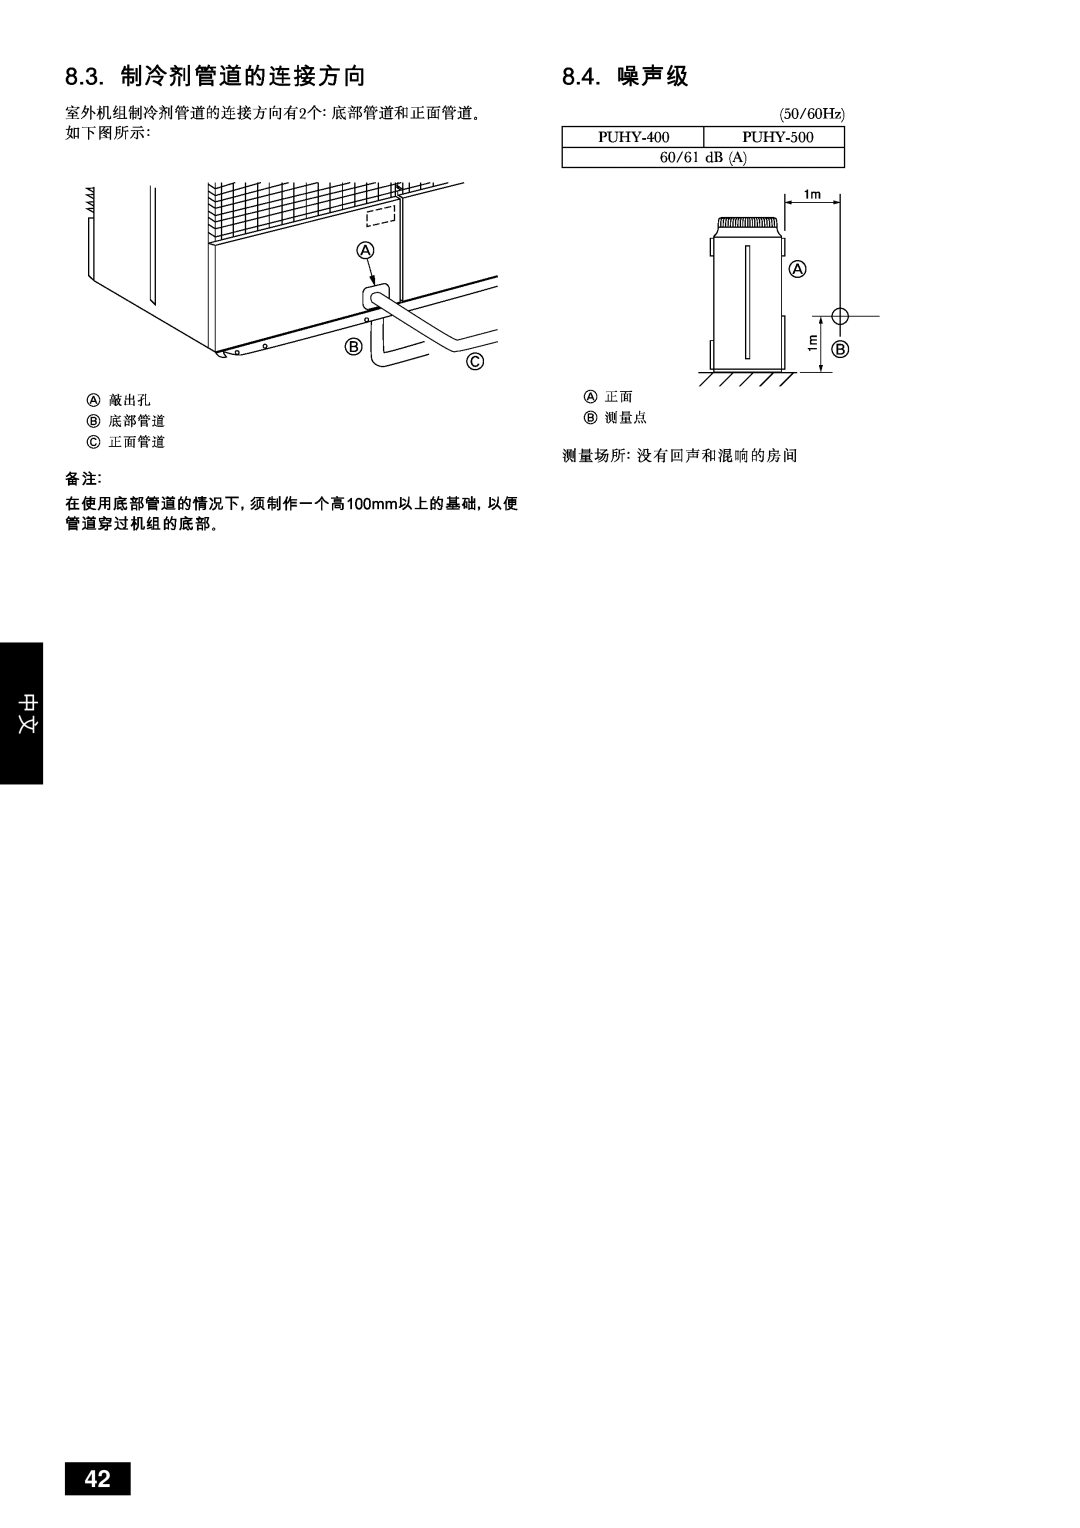 Mitsubishi Electronics PUHY-YMC installation manual Ukpk, Ukqk, ERMLSMeòF mrevJQMM mrevJRMM SMLSN=Ç=EF 